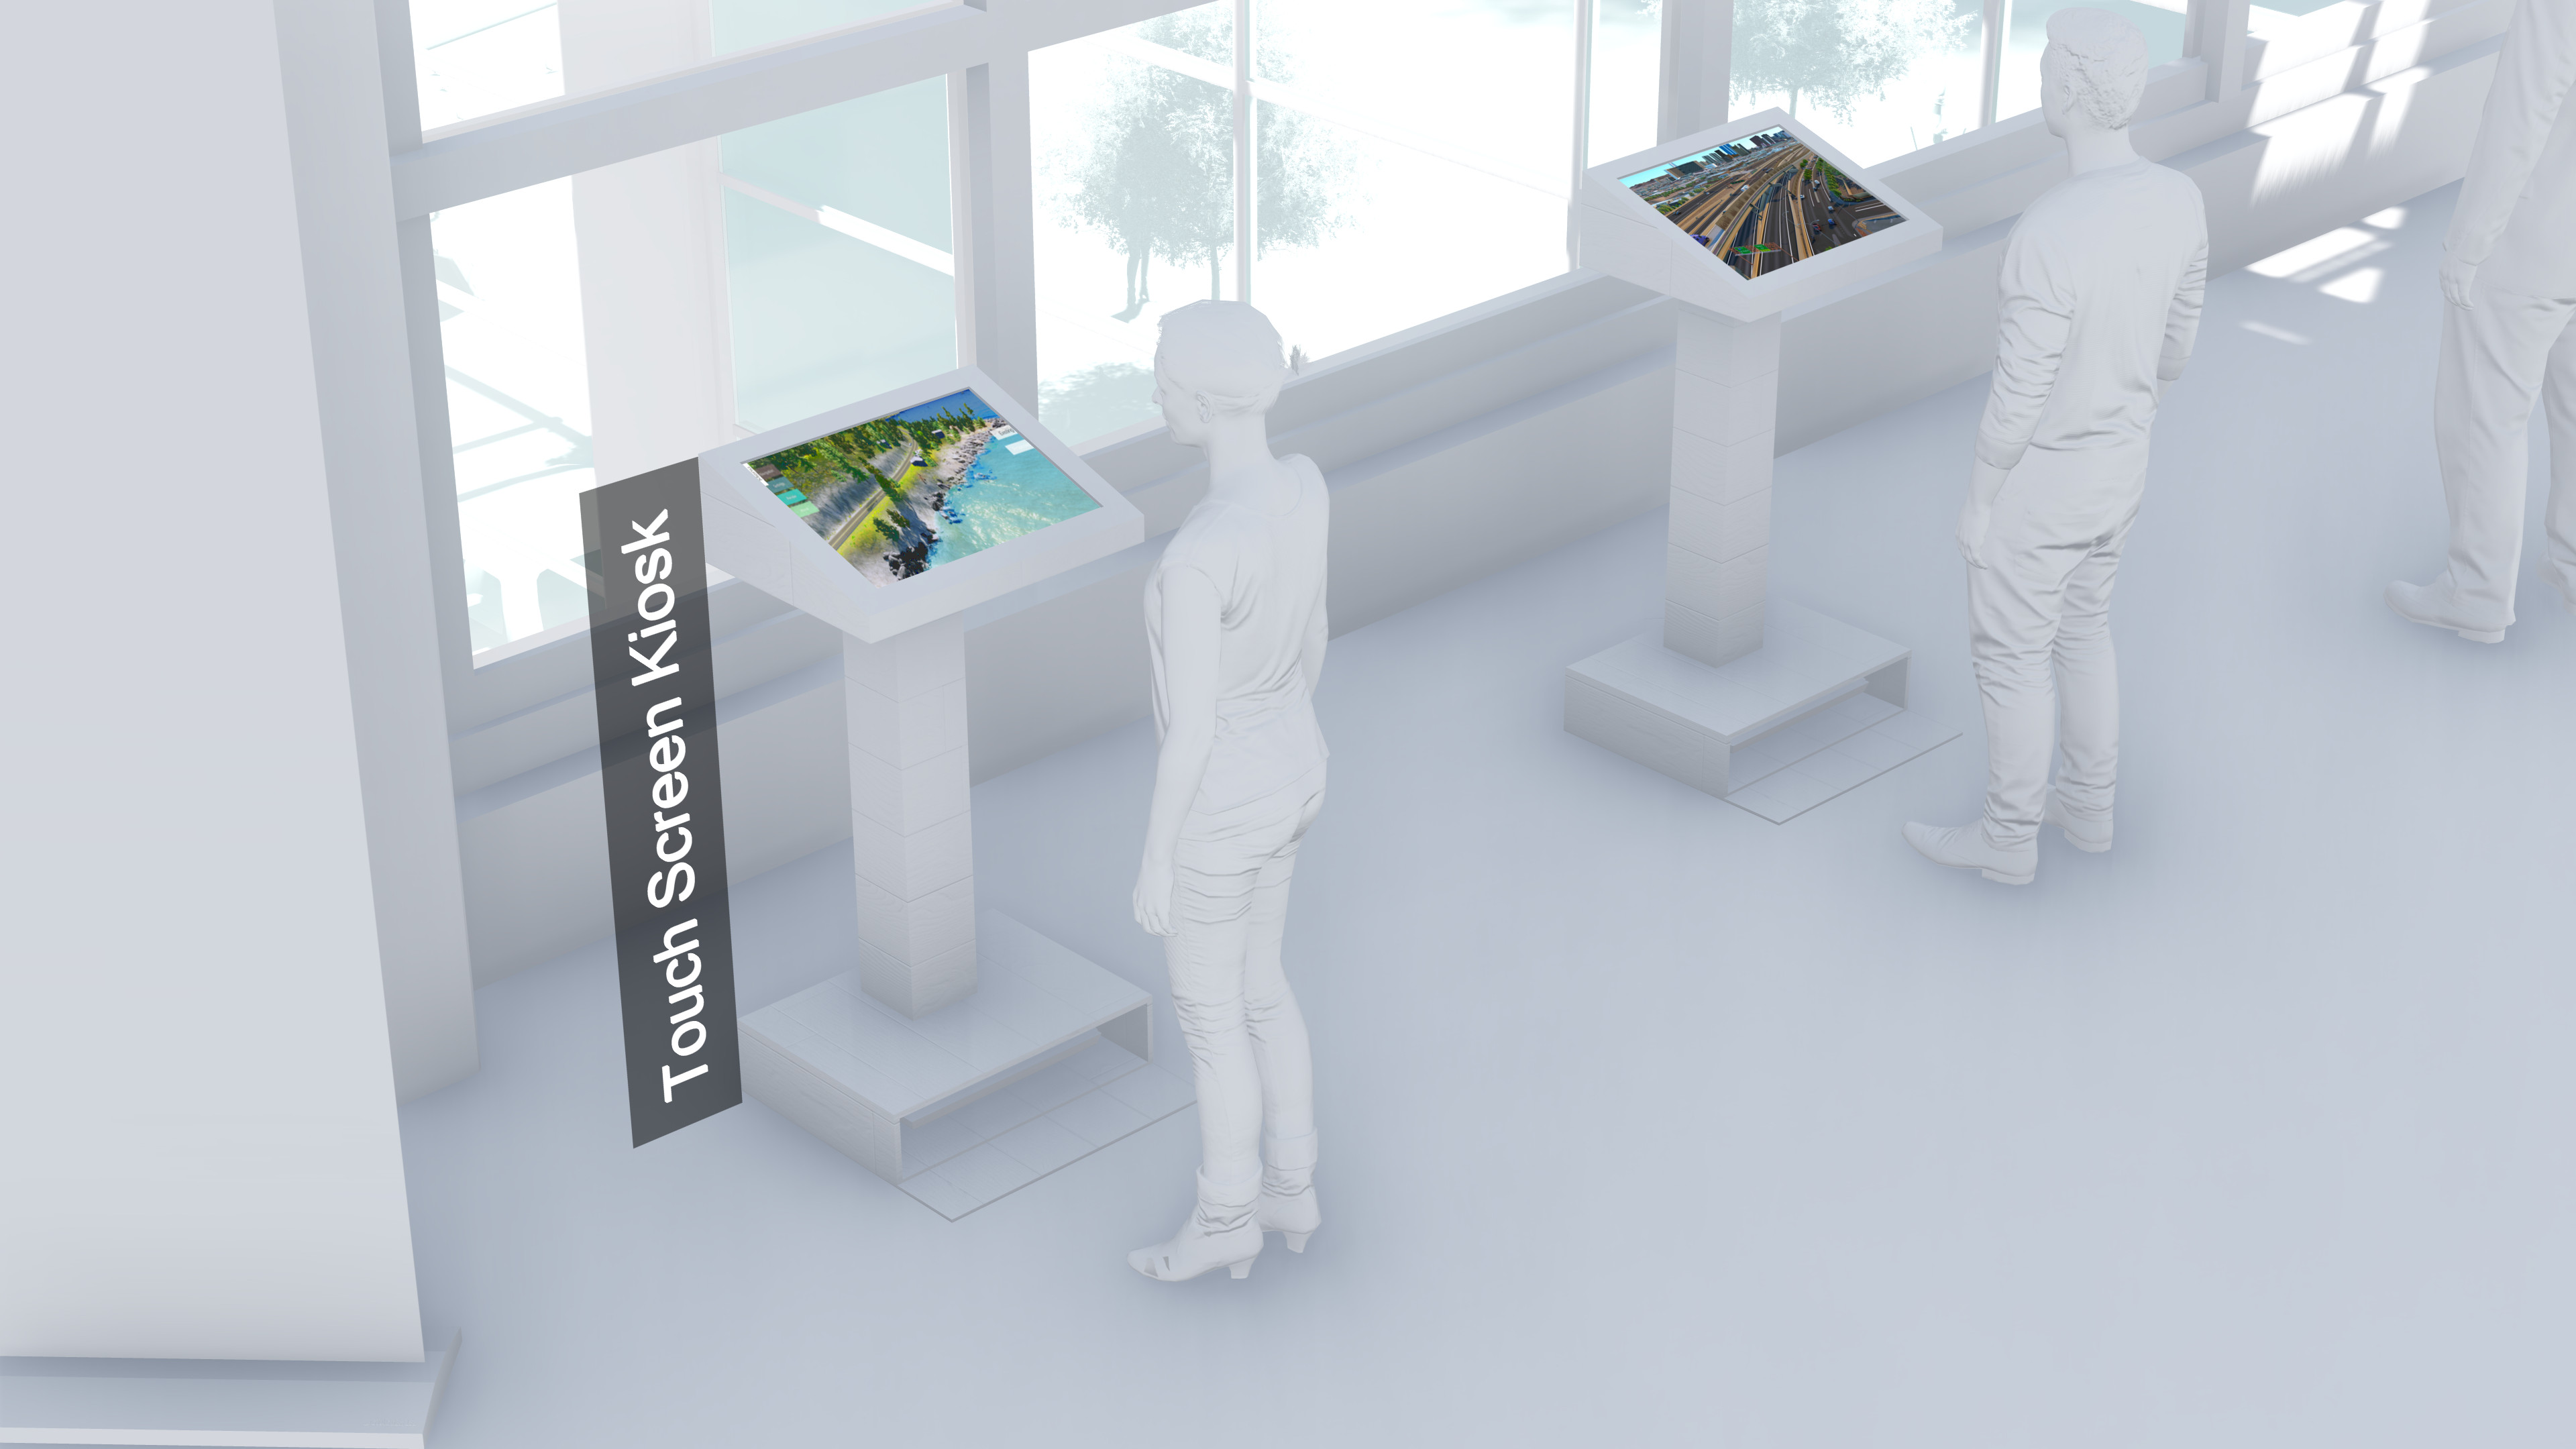 Touch Screen, Kiosk, Interactive Presentation